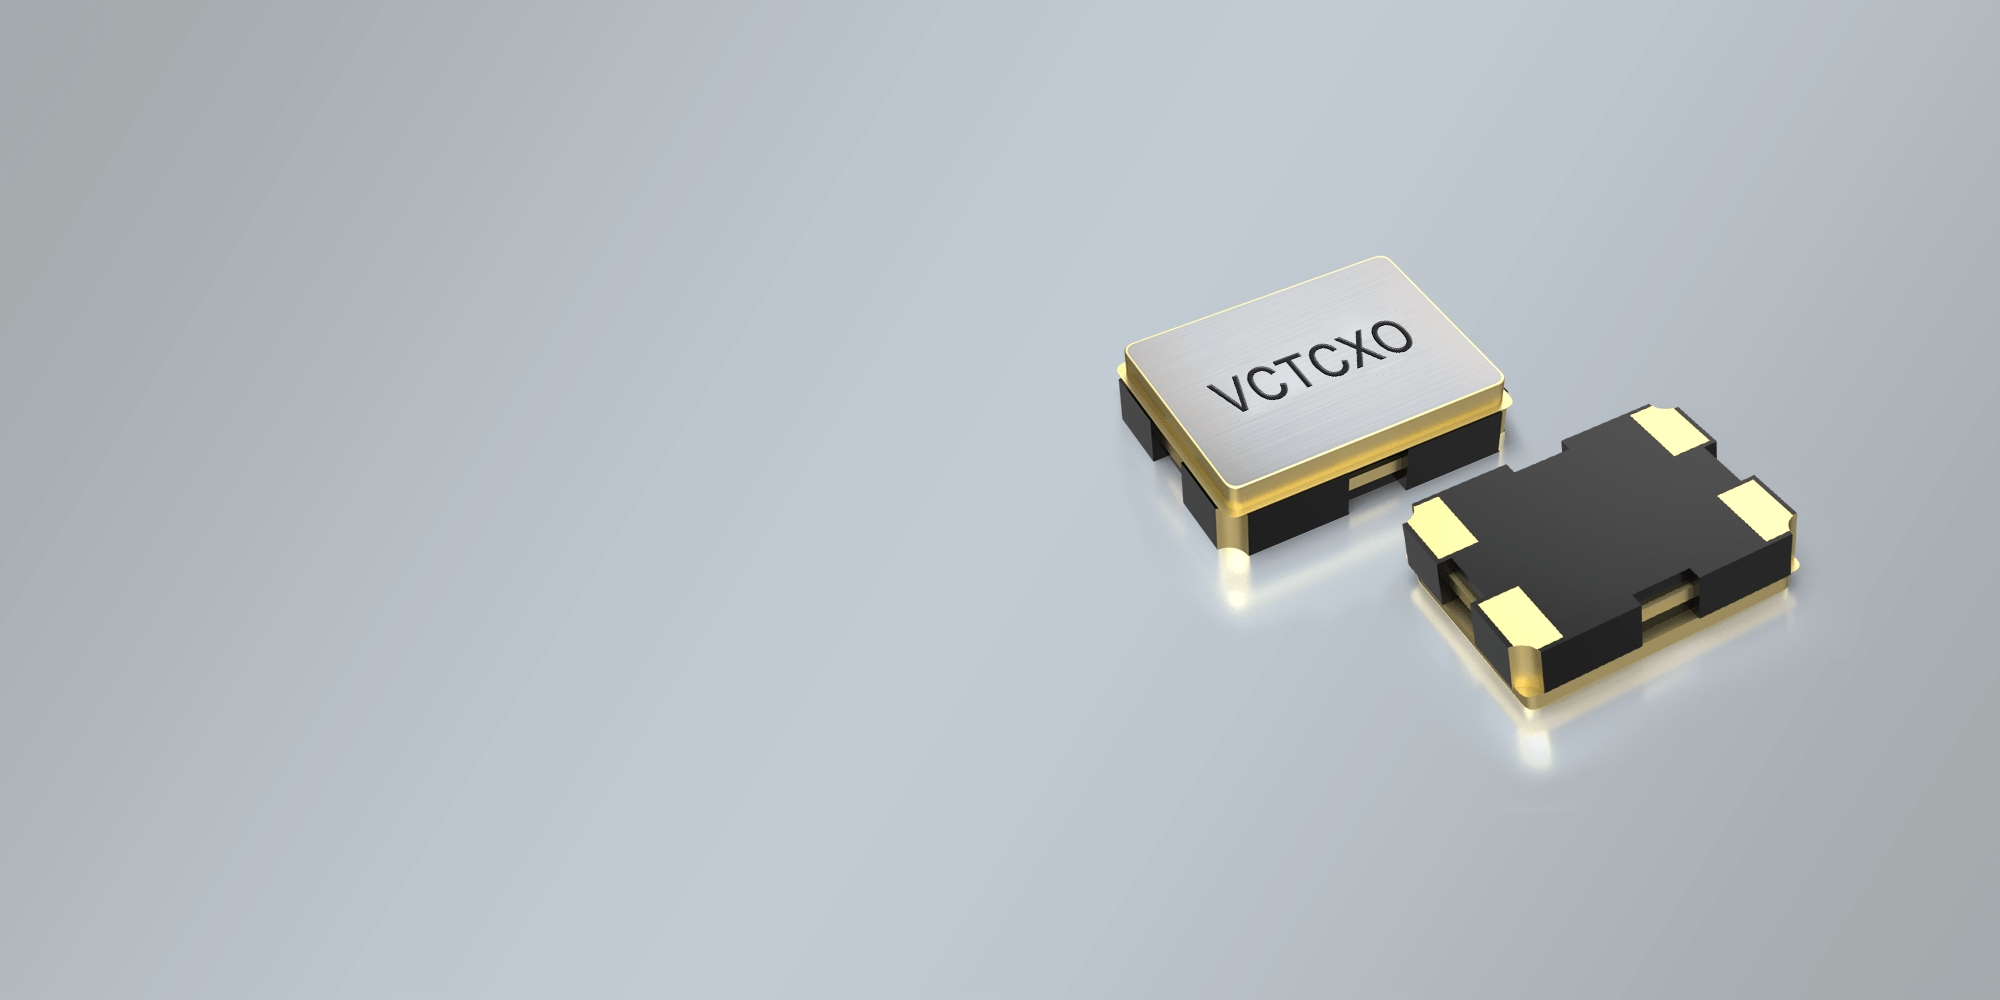 SMD VCTCXO OSCILLATOR 2.5 x 2.0 mm 9.6 - 52.0 MHz